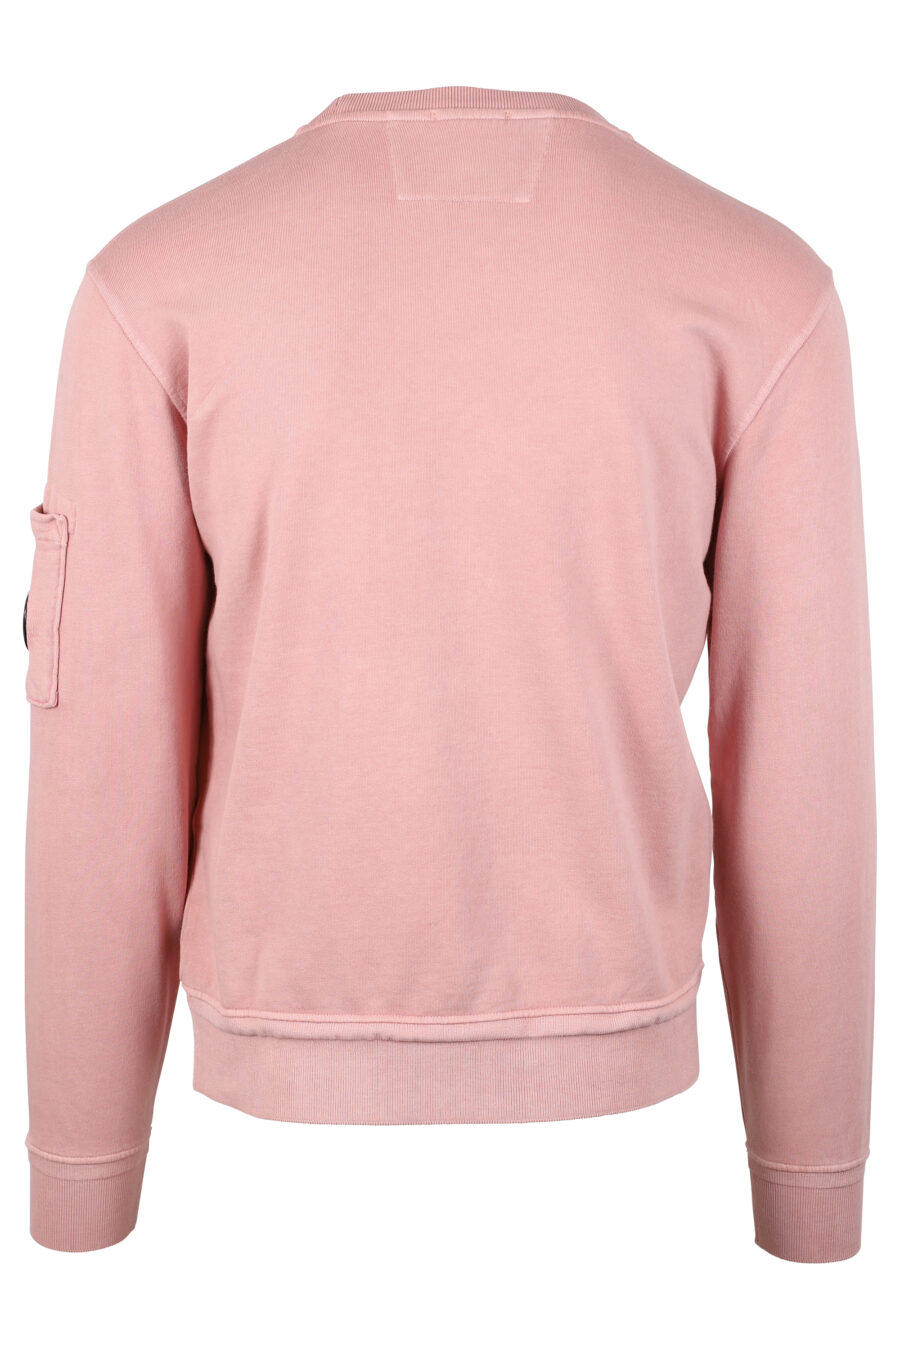 Rosa Sweatshirt mit Fleecefutter und kreisförmigem Mini-Logo - IMG 4702